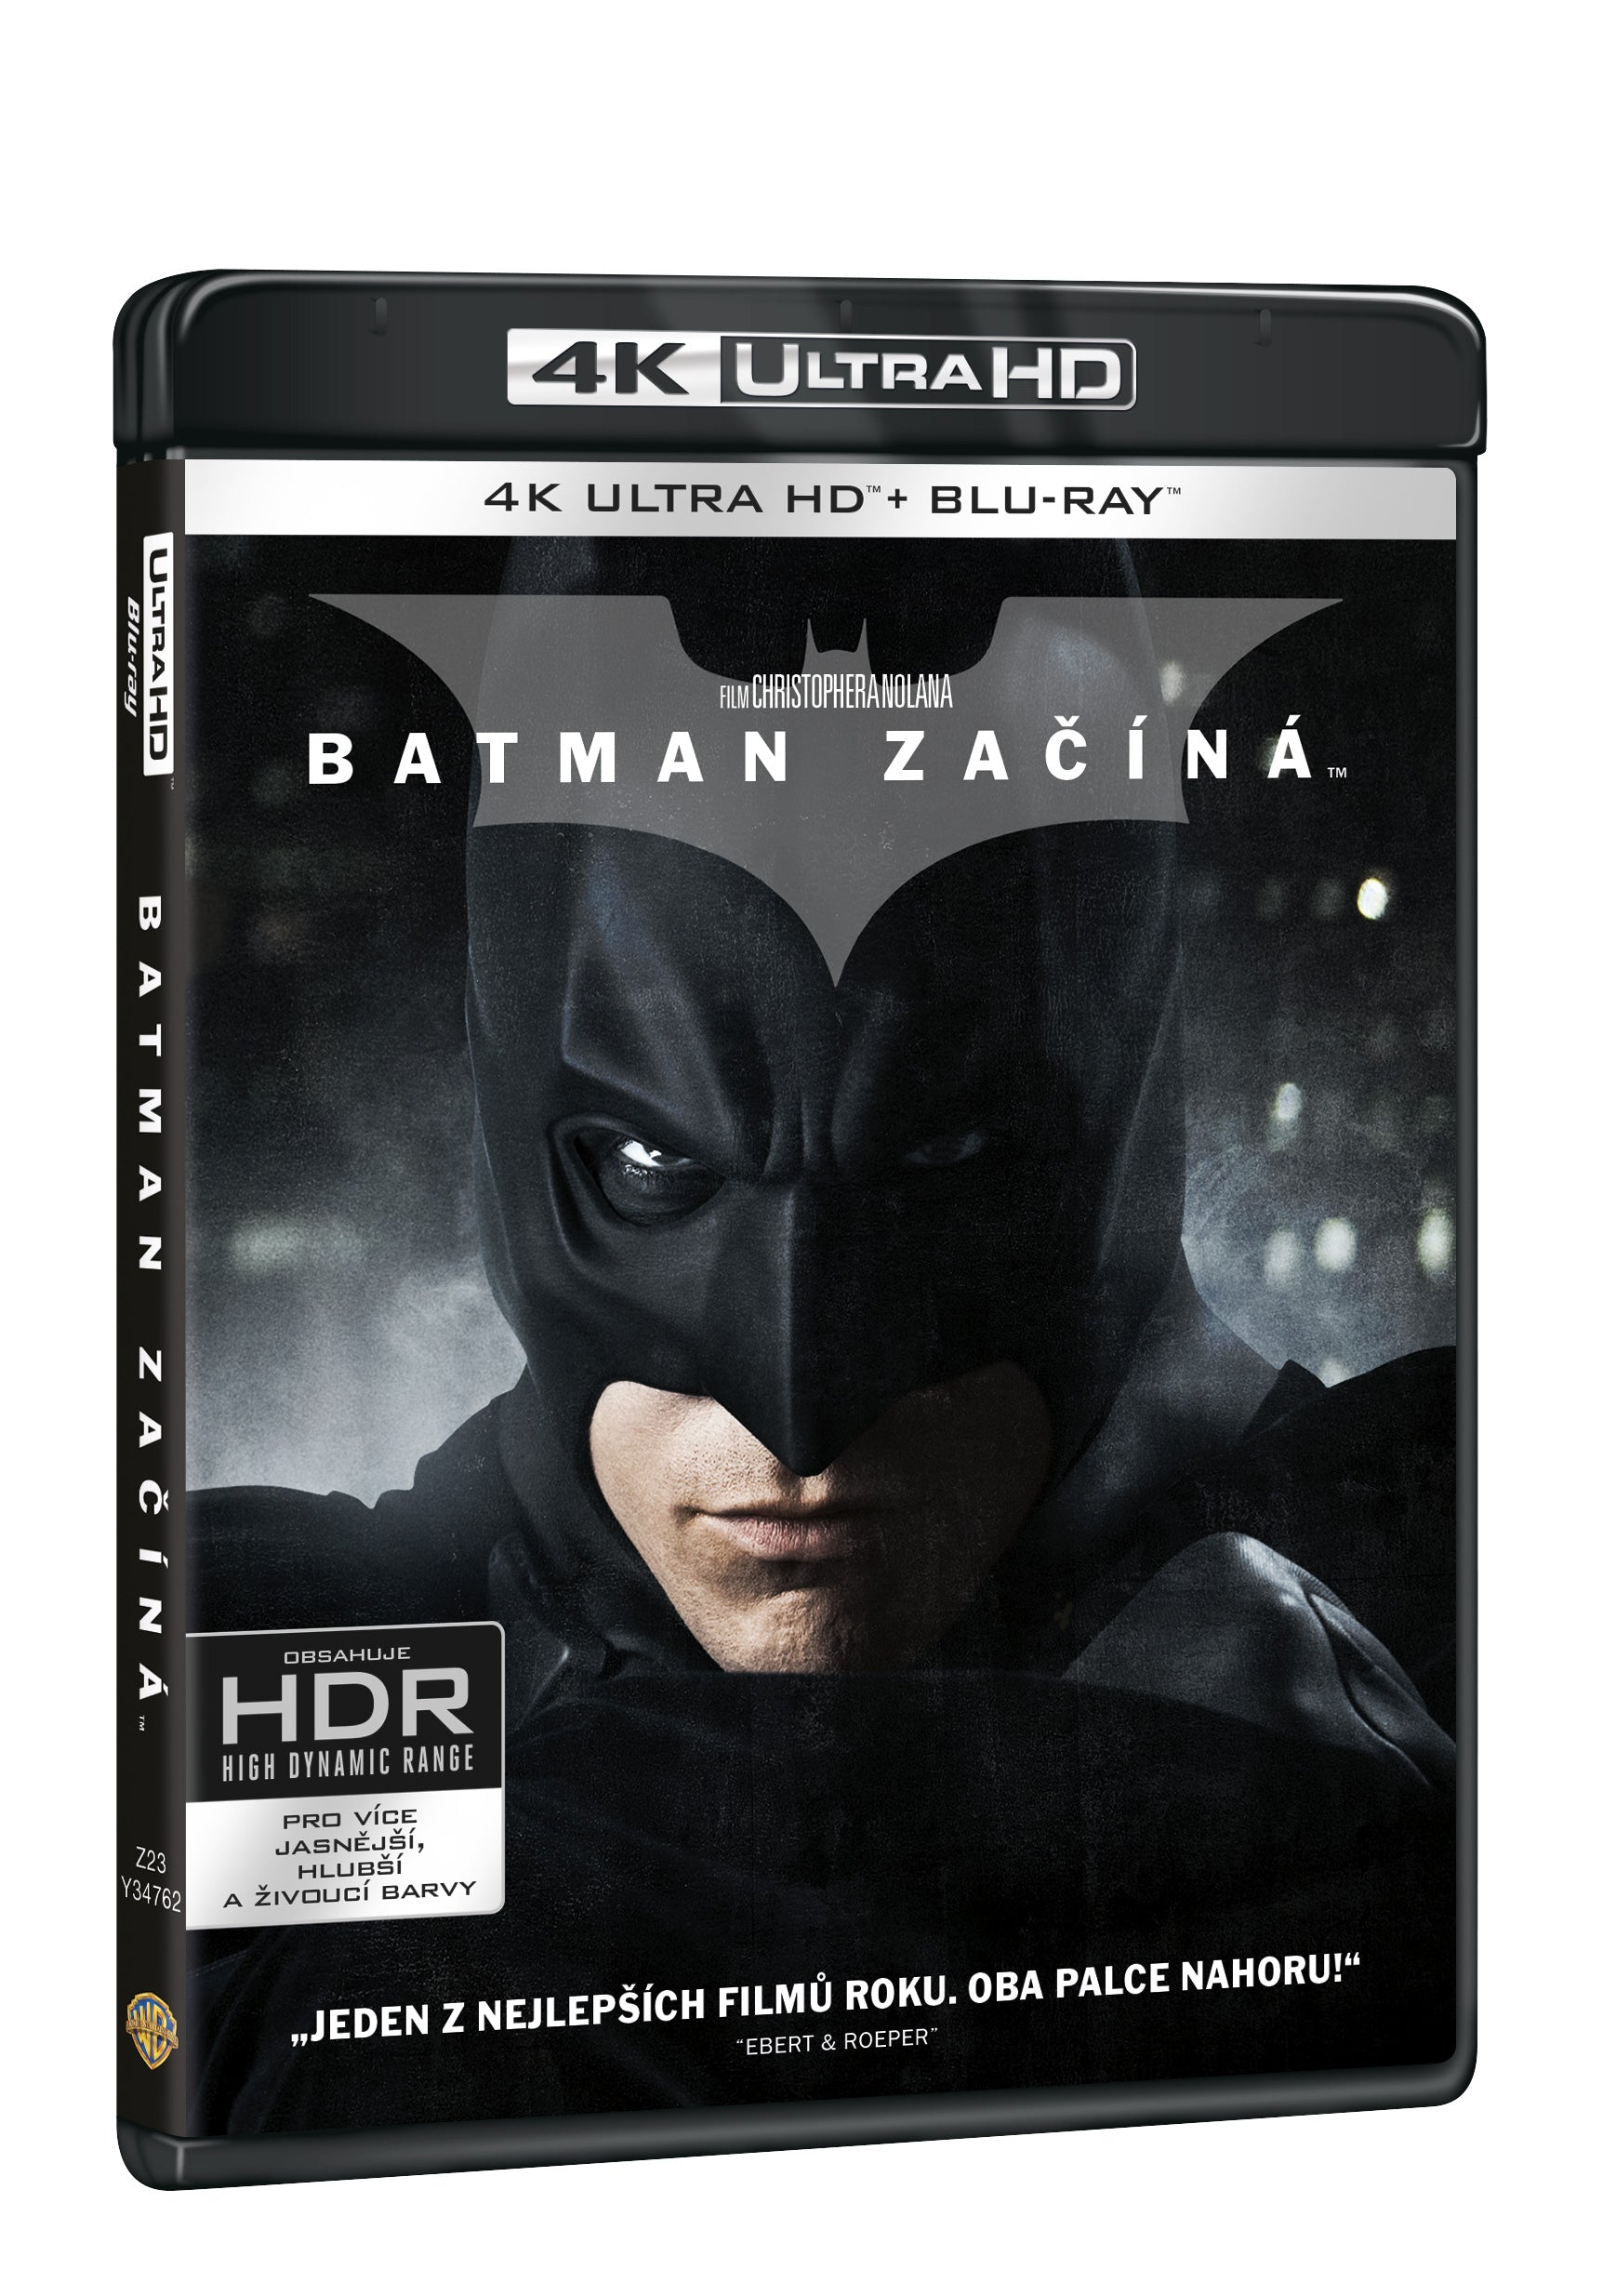 Batman zacina 3BD (UHD+BD+bonus disk) / Batman Begins - Czech version